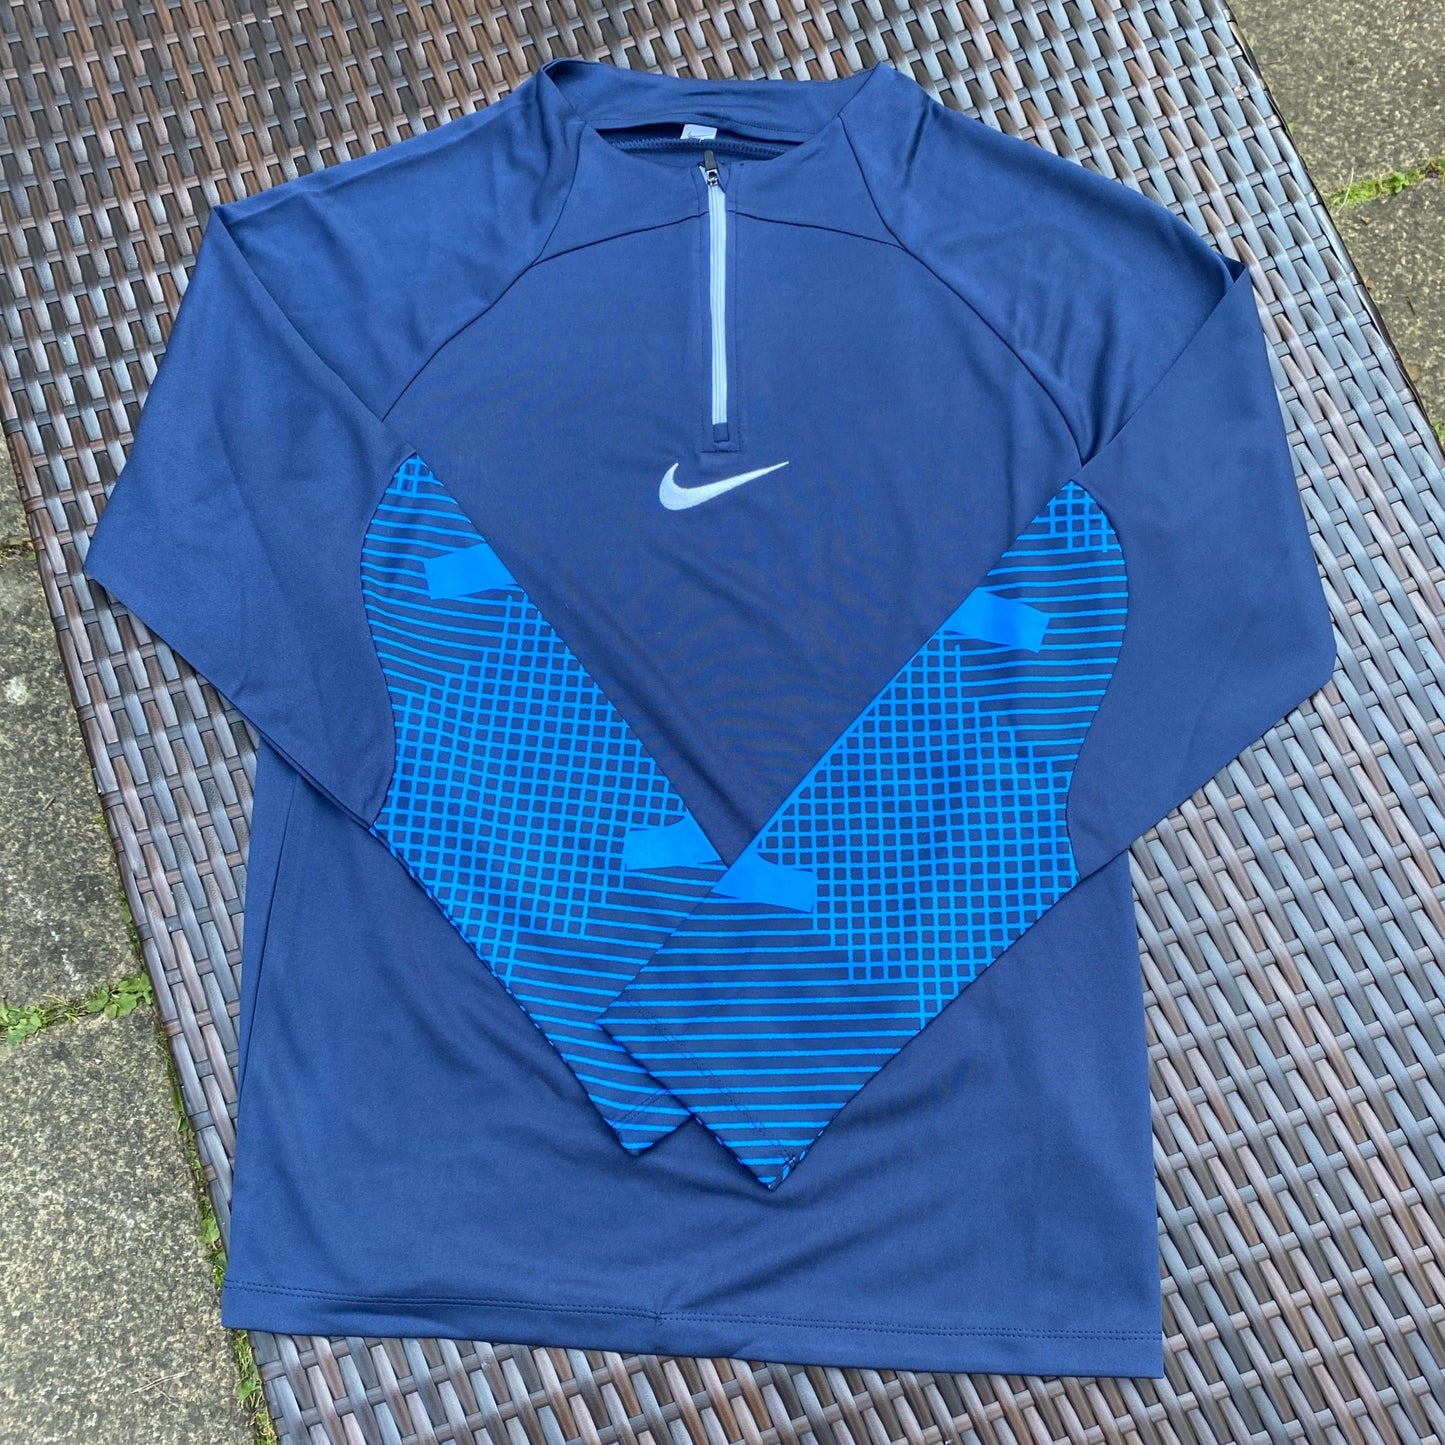 Nike Blue "Dri Fit" Sportswear Tracksuit